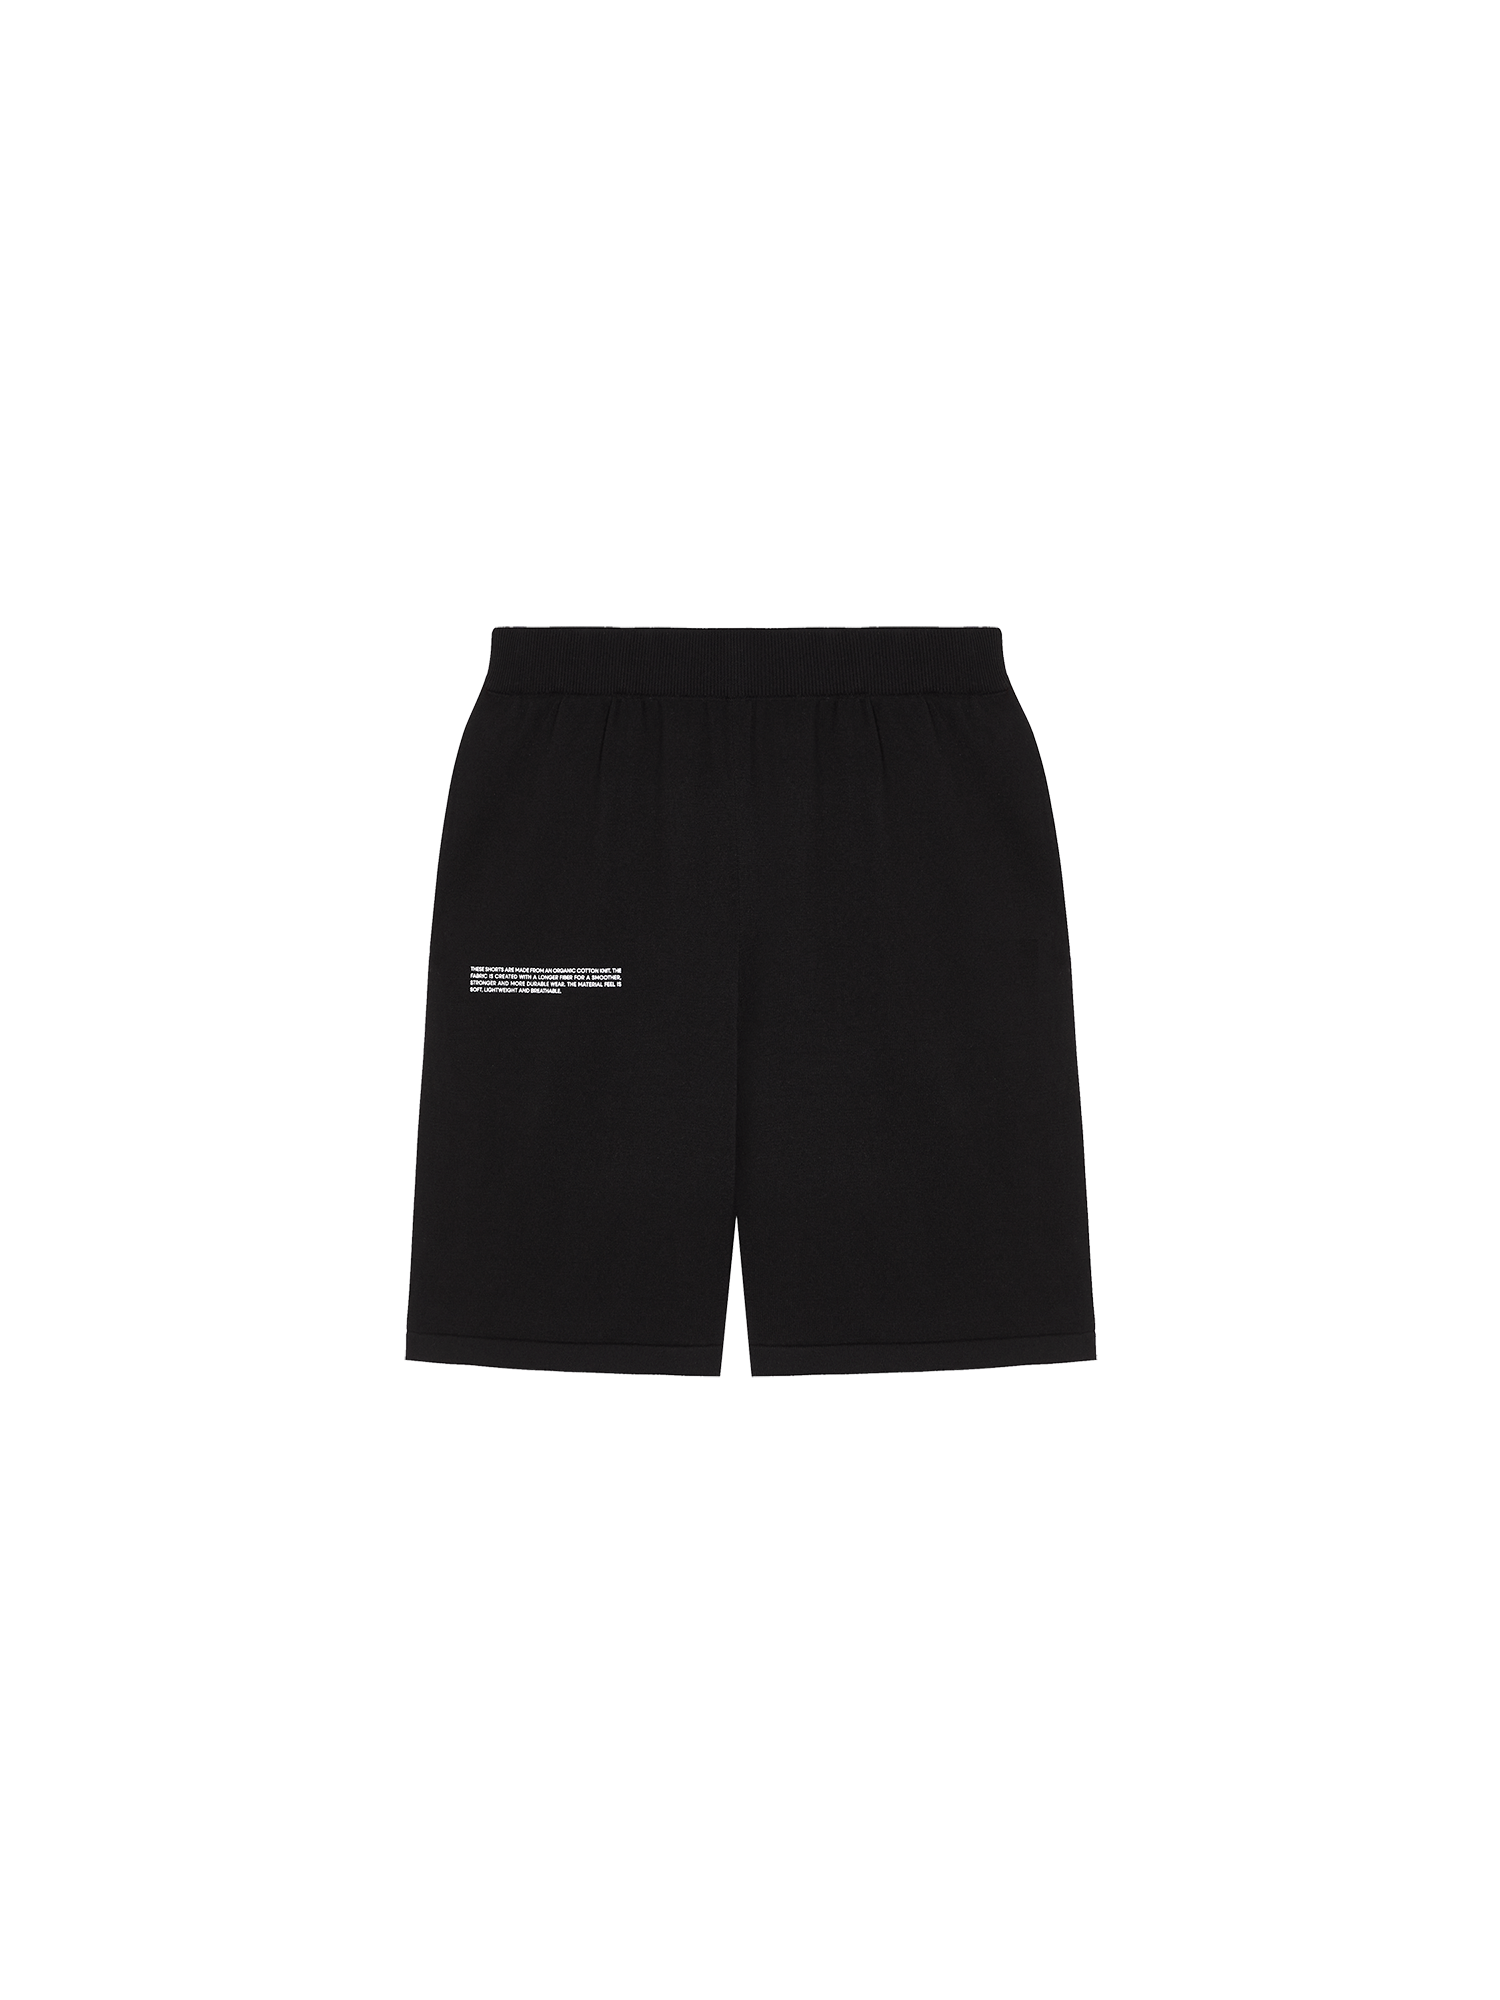 Cotton-Knit-Long-Shorts-Black-packshot-3